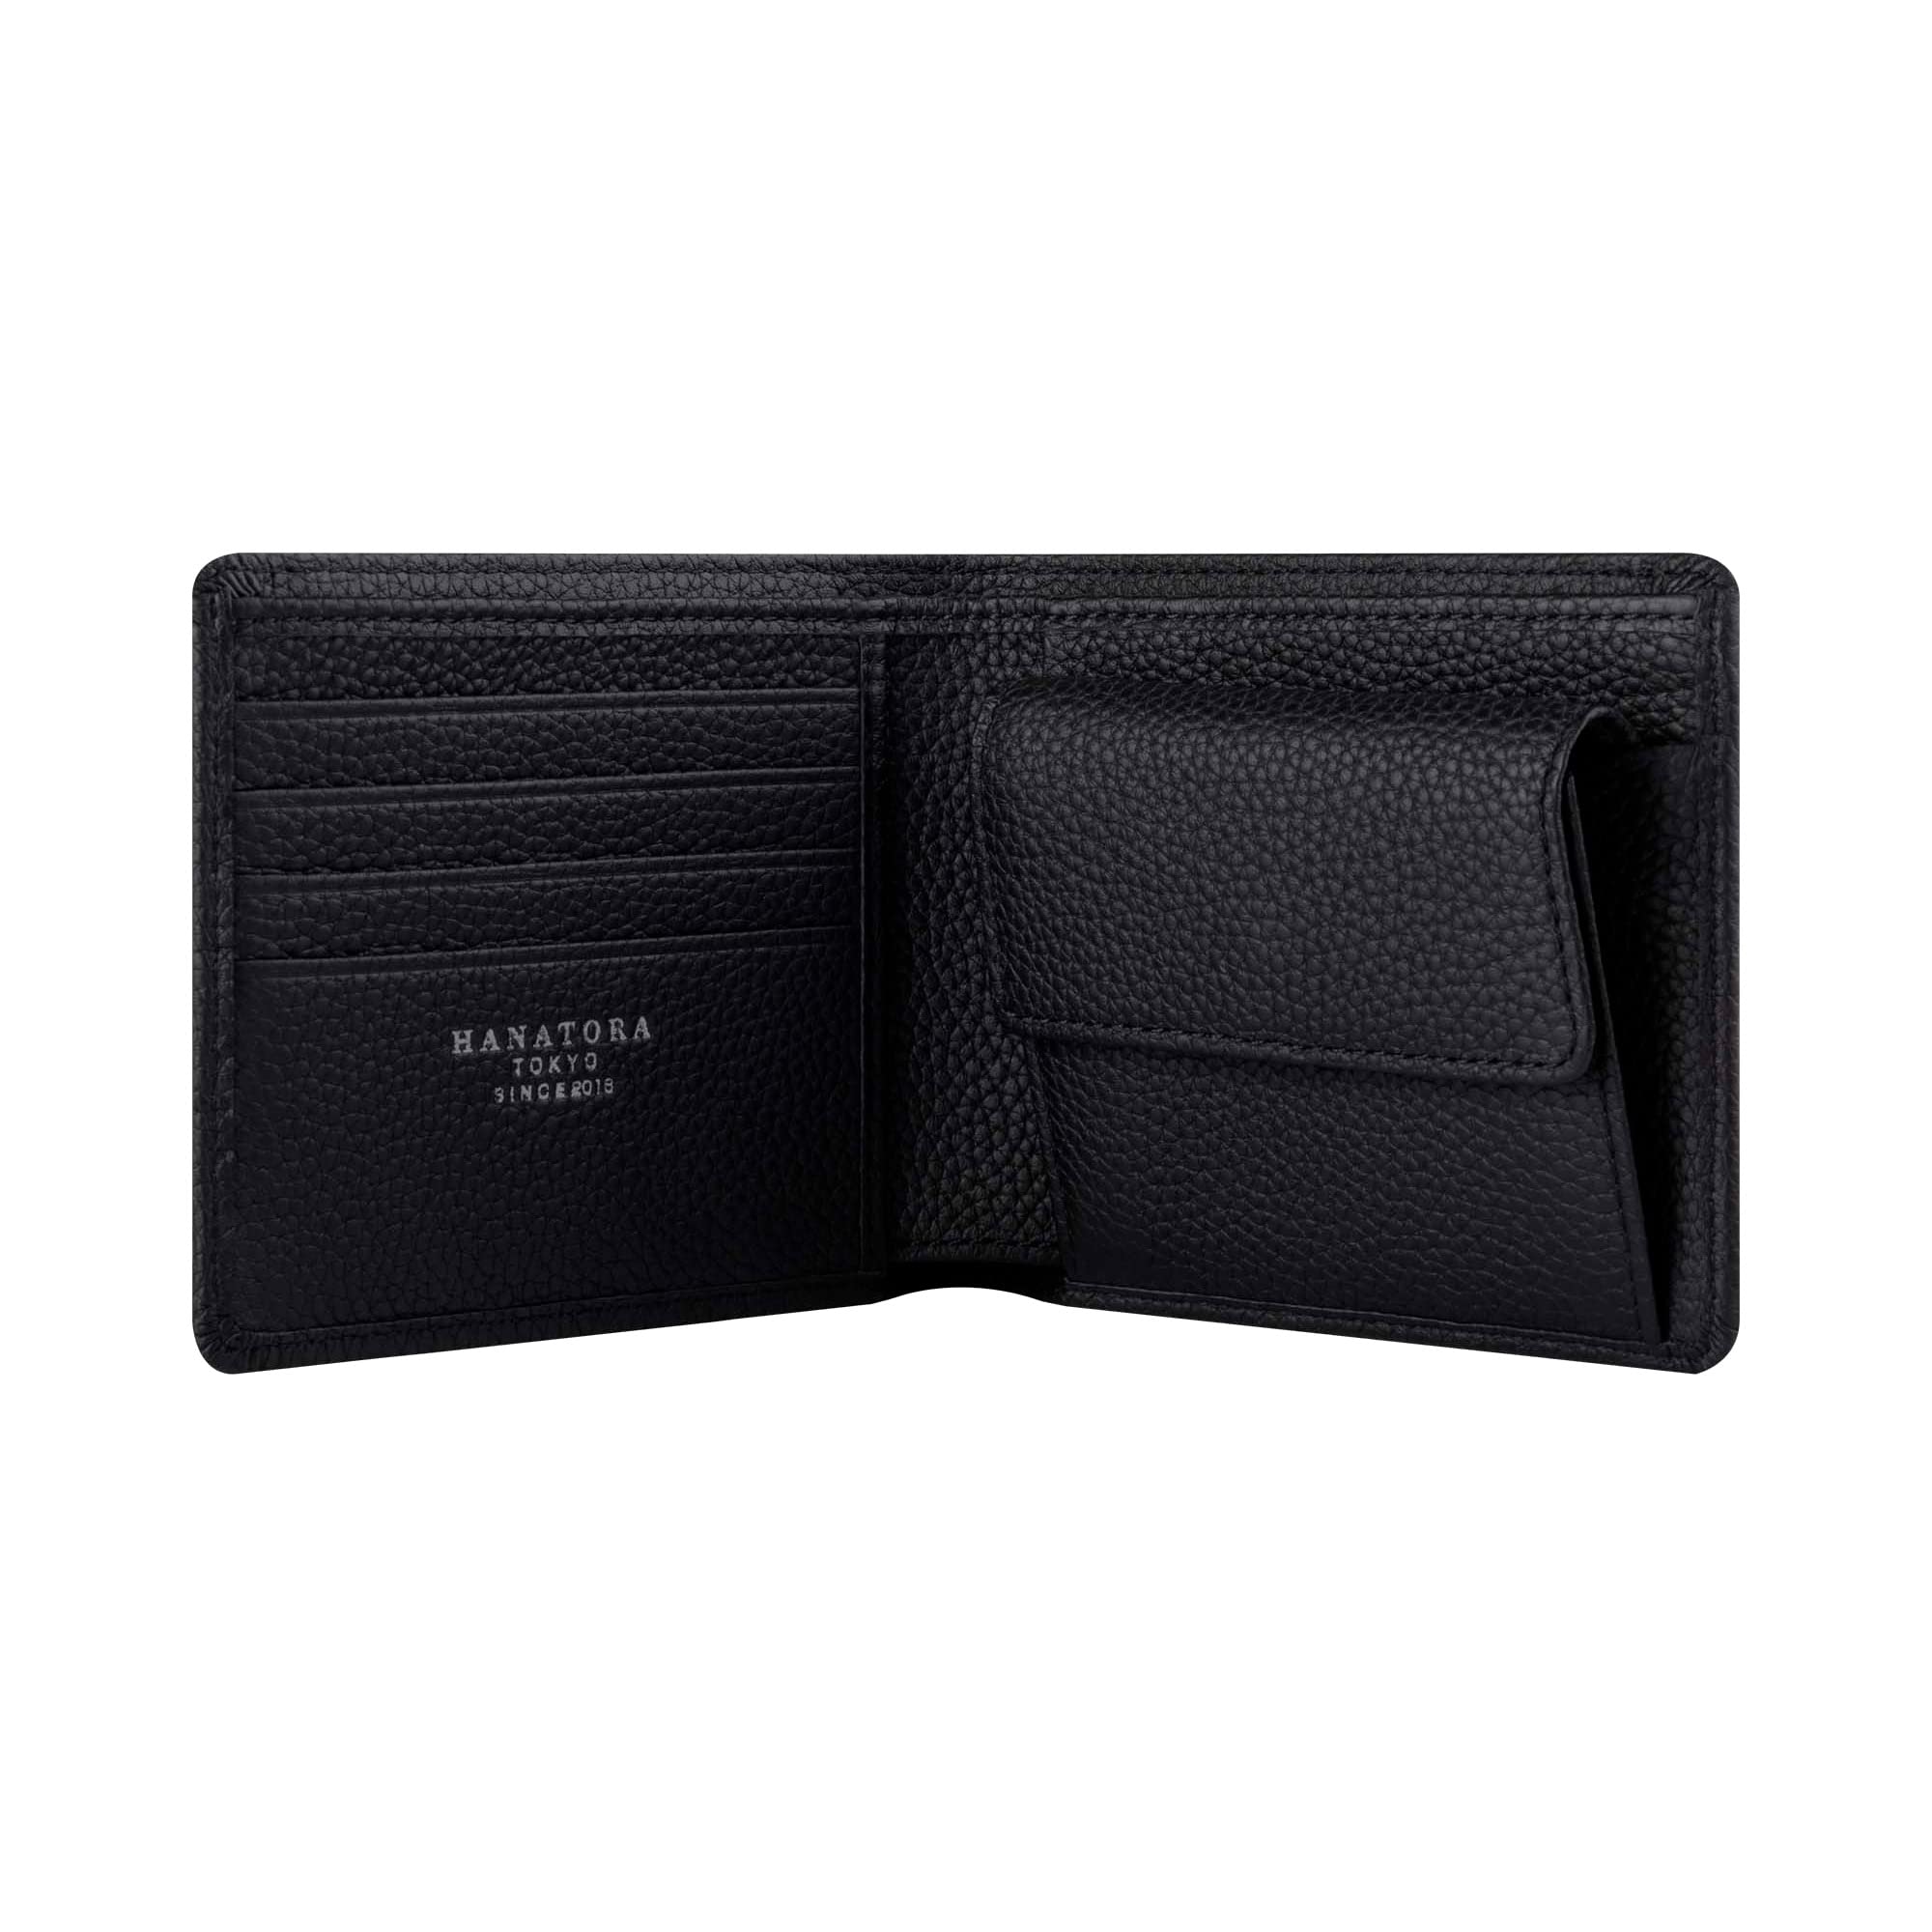 [hanatora] 本革 ミニ財布 シュリンクレザー 二つ折り財布 薄型 小さい財布 スリム コンパクト カードケース レディース メンズ サイフ